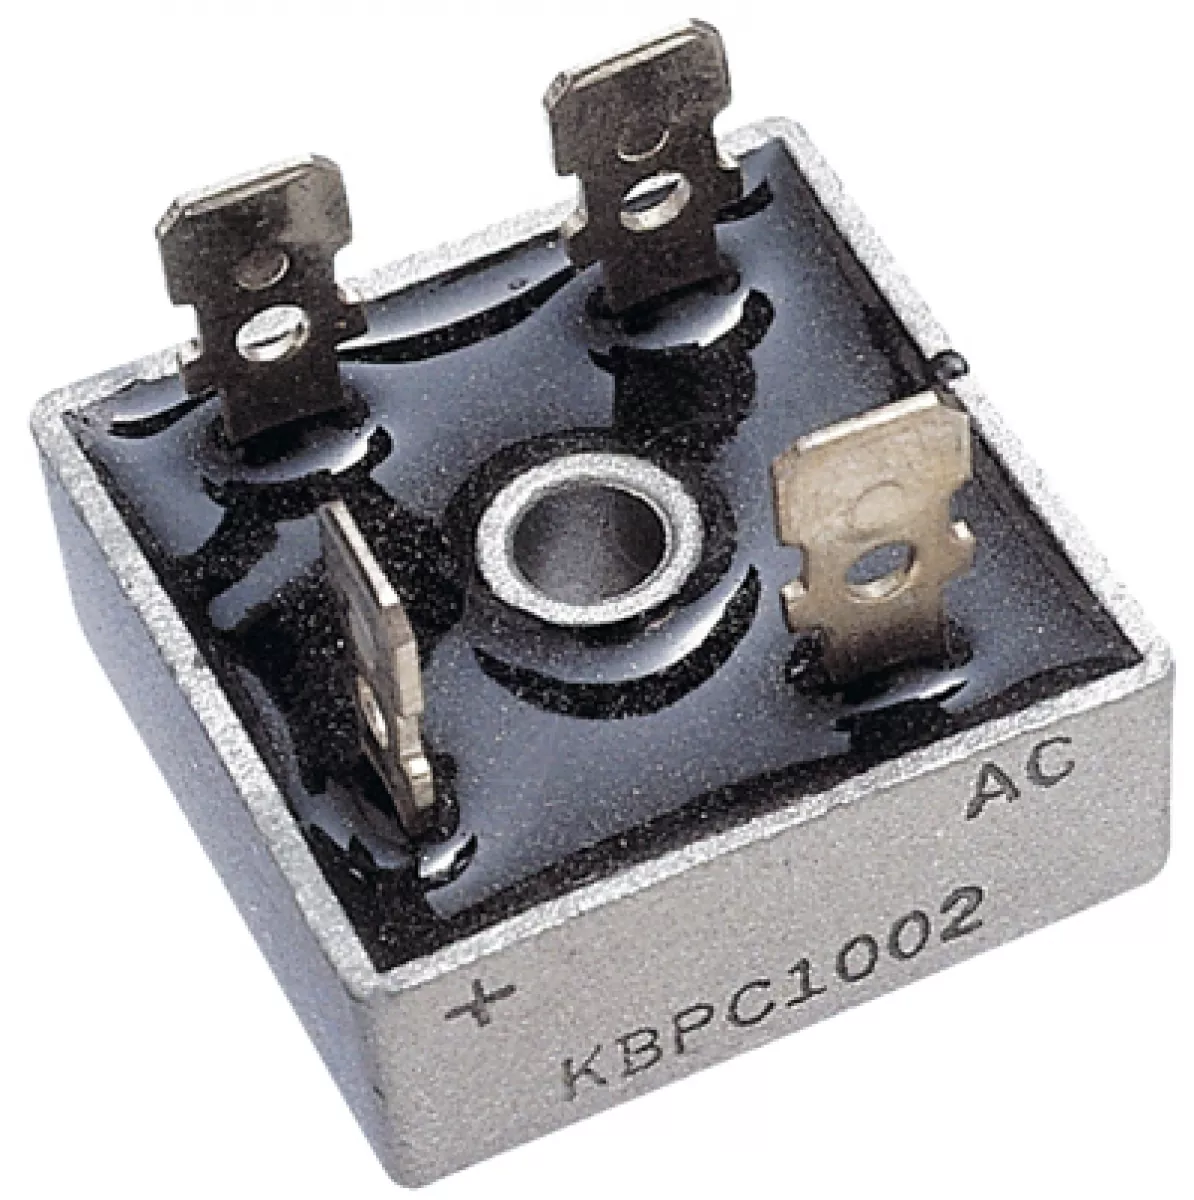 HY KBPC1508 Metall Brückengleichrichter 15A max 560V KBPC1508 EDB500C10A